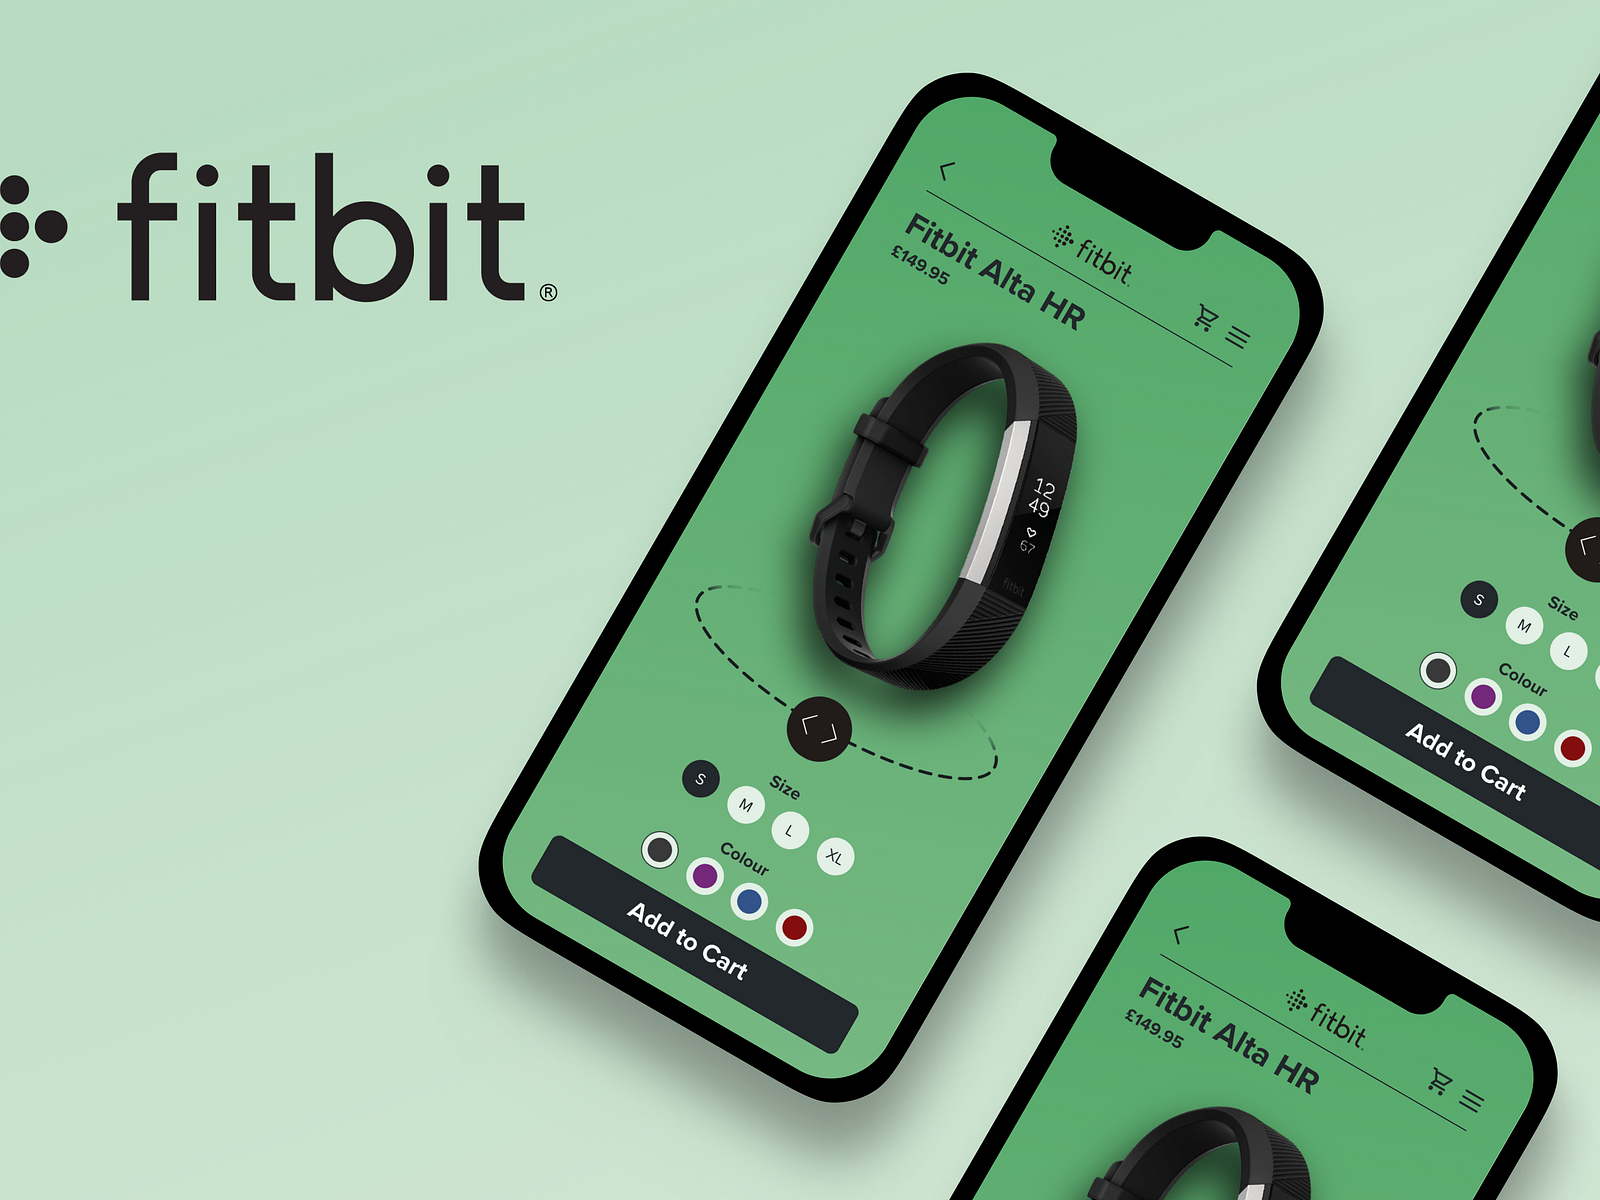 Fitbit - UI Design by Dan Hoye on Dribbble